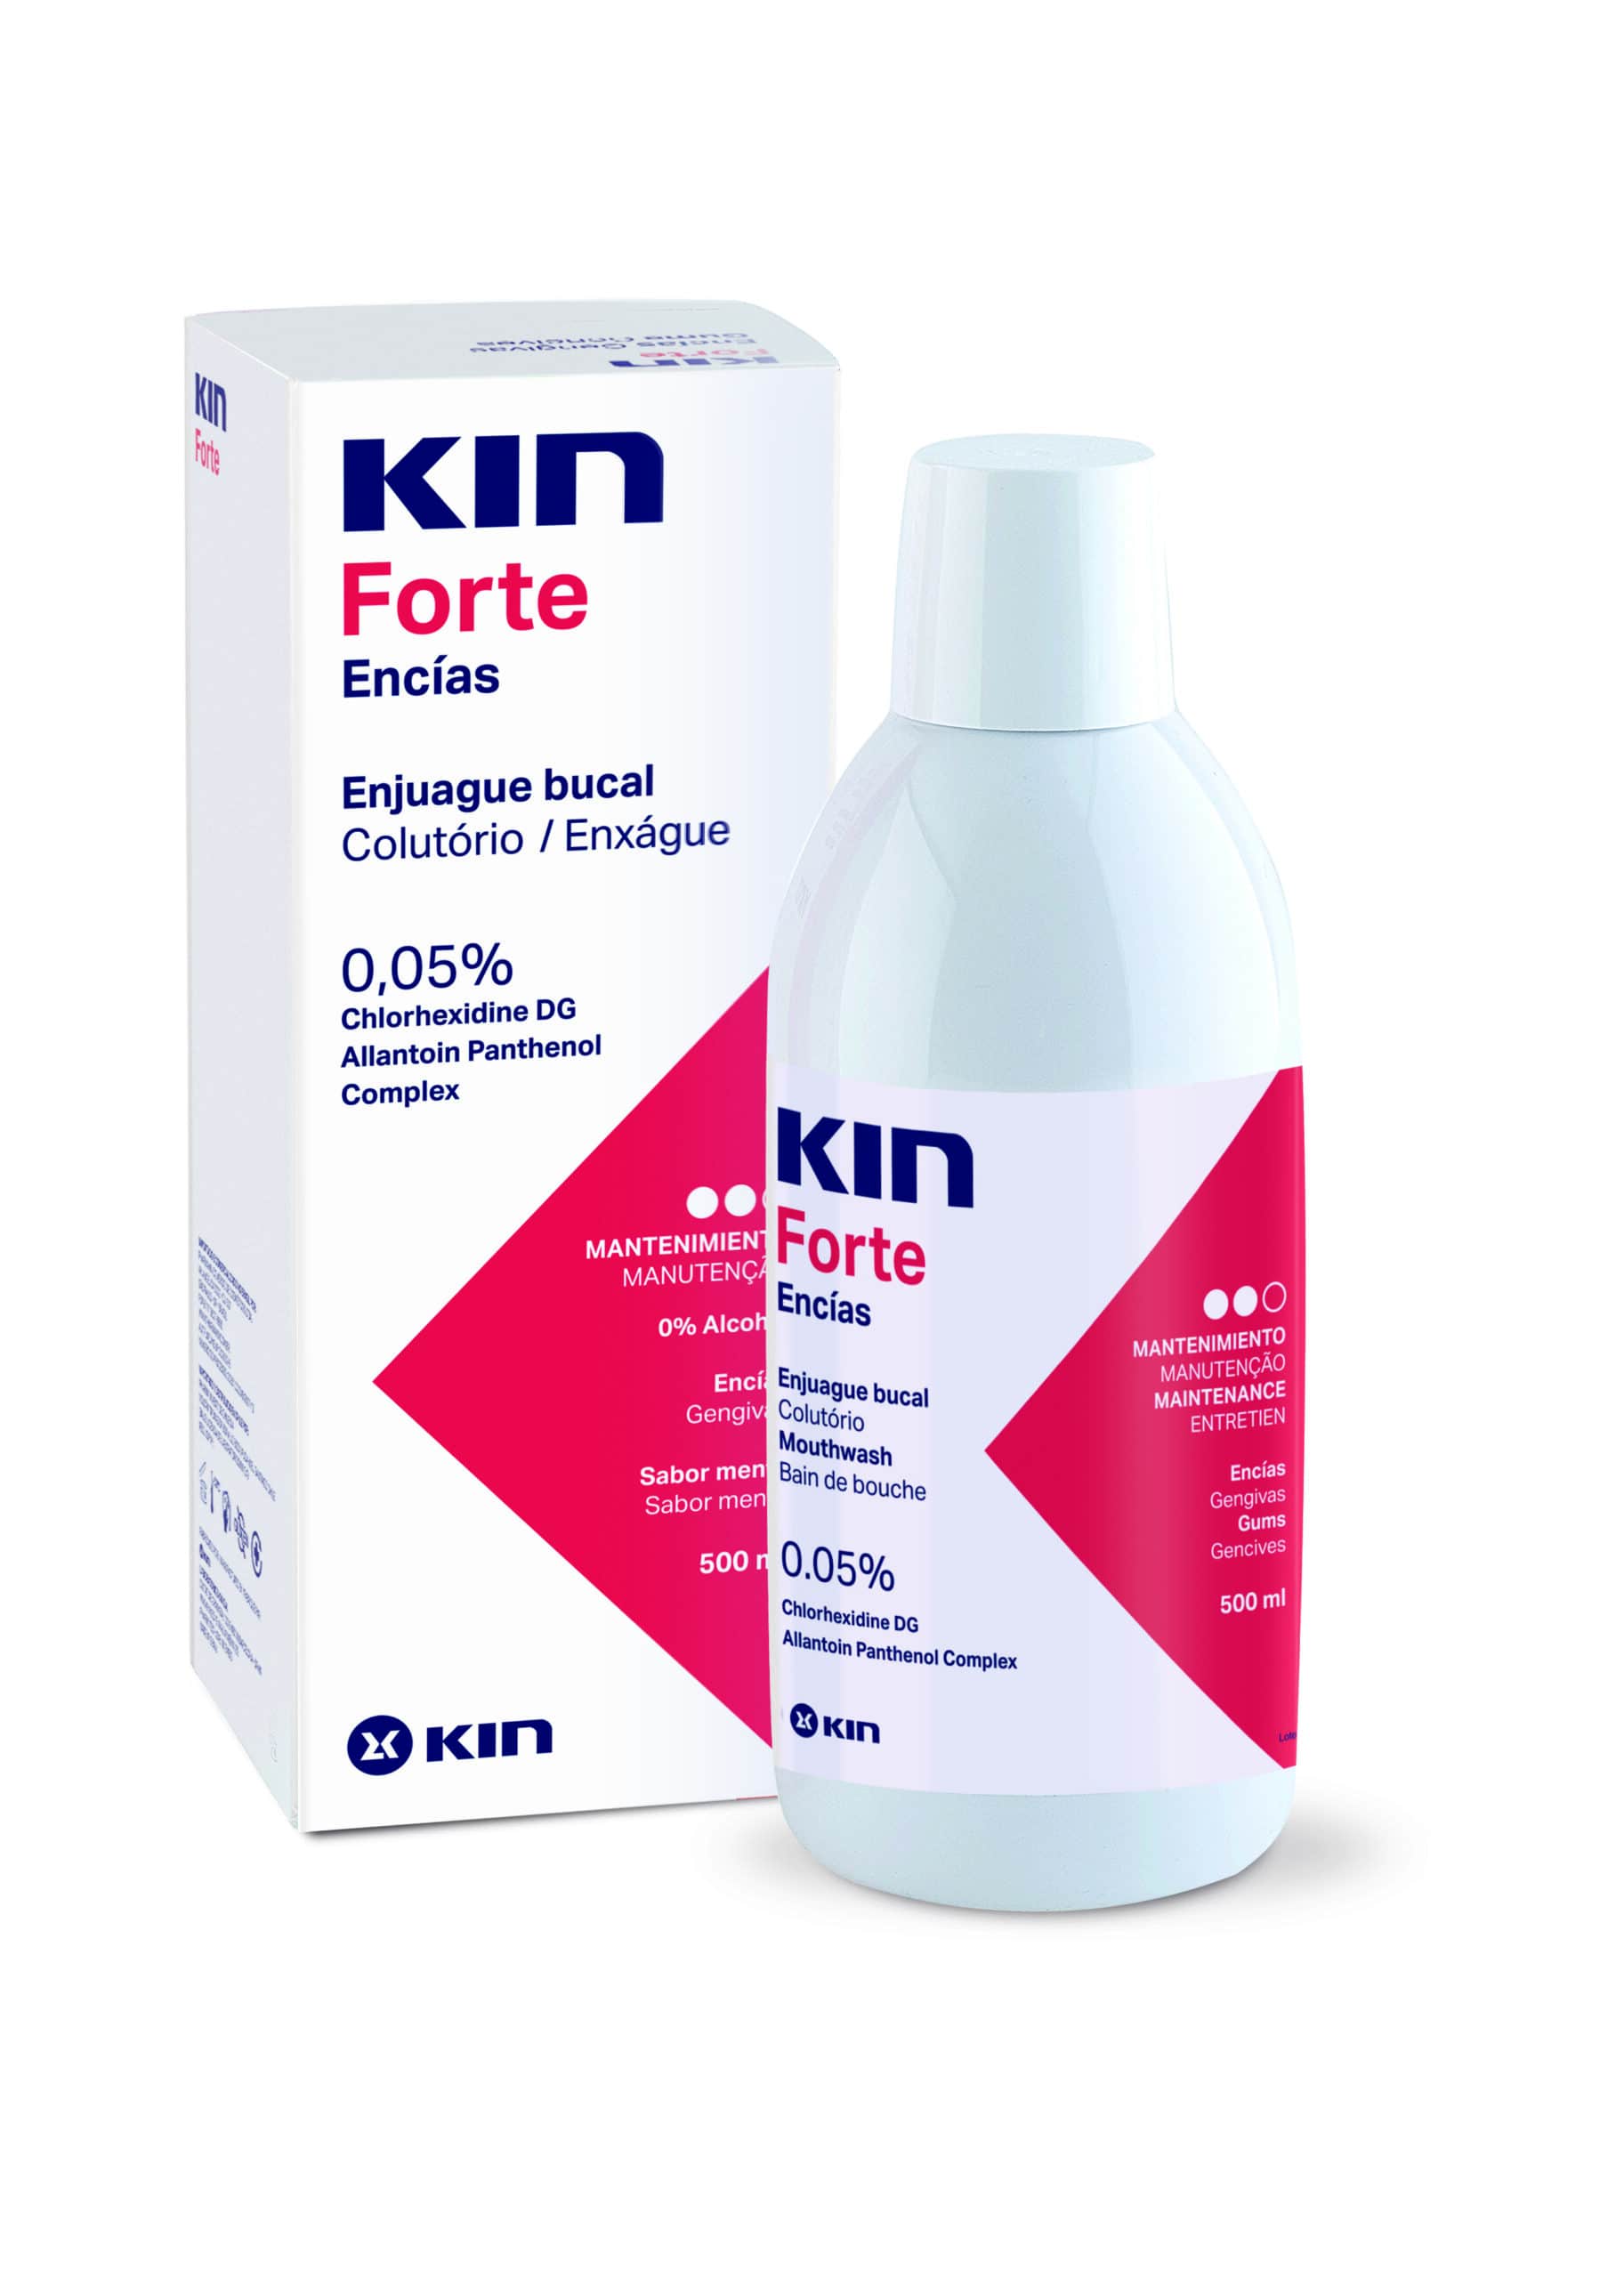 KIN Forte enjuague bucal de 500 ml